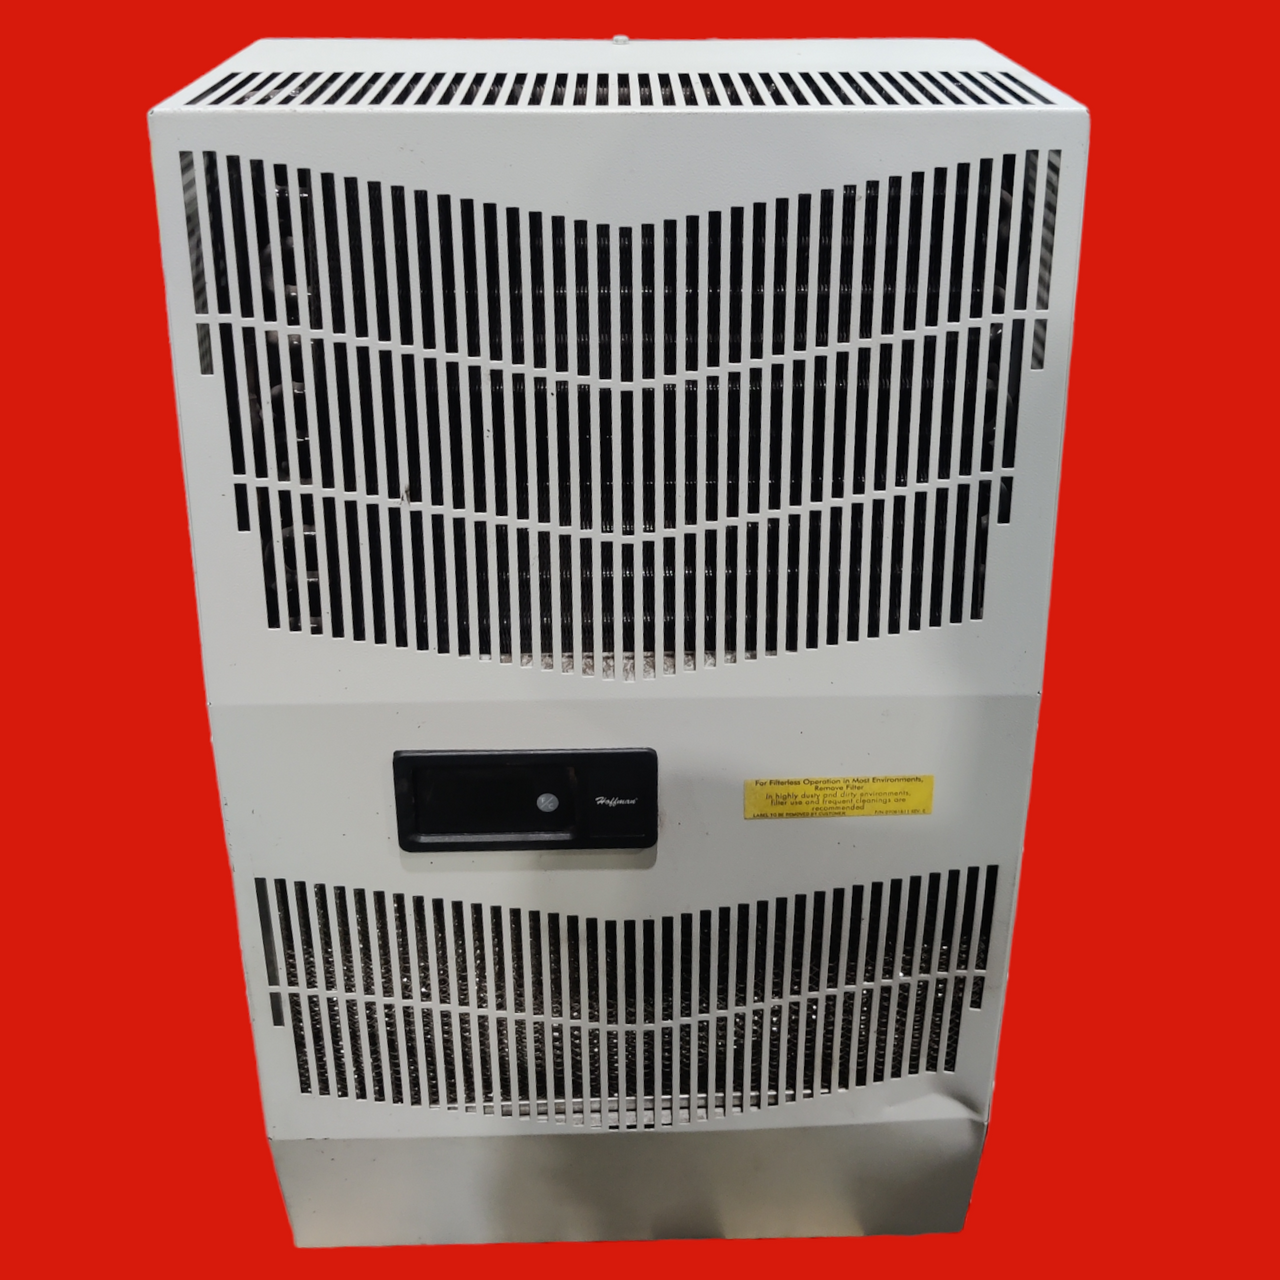 Hoffman Pentair Enclosure Air Conditioner: 4600/4900 BtuH, Wall Mount, G280446G050